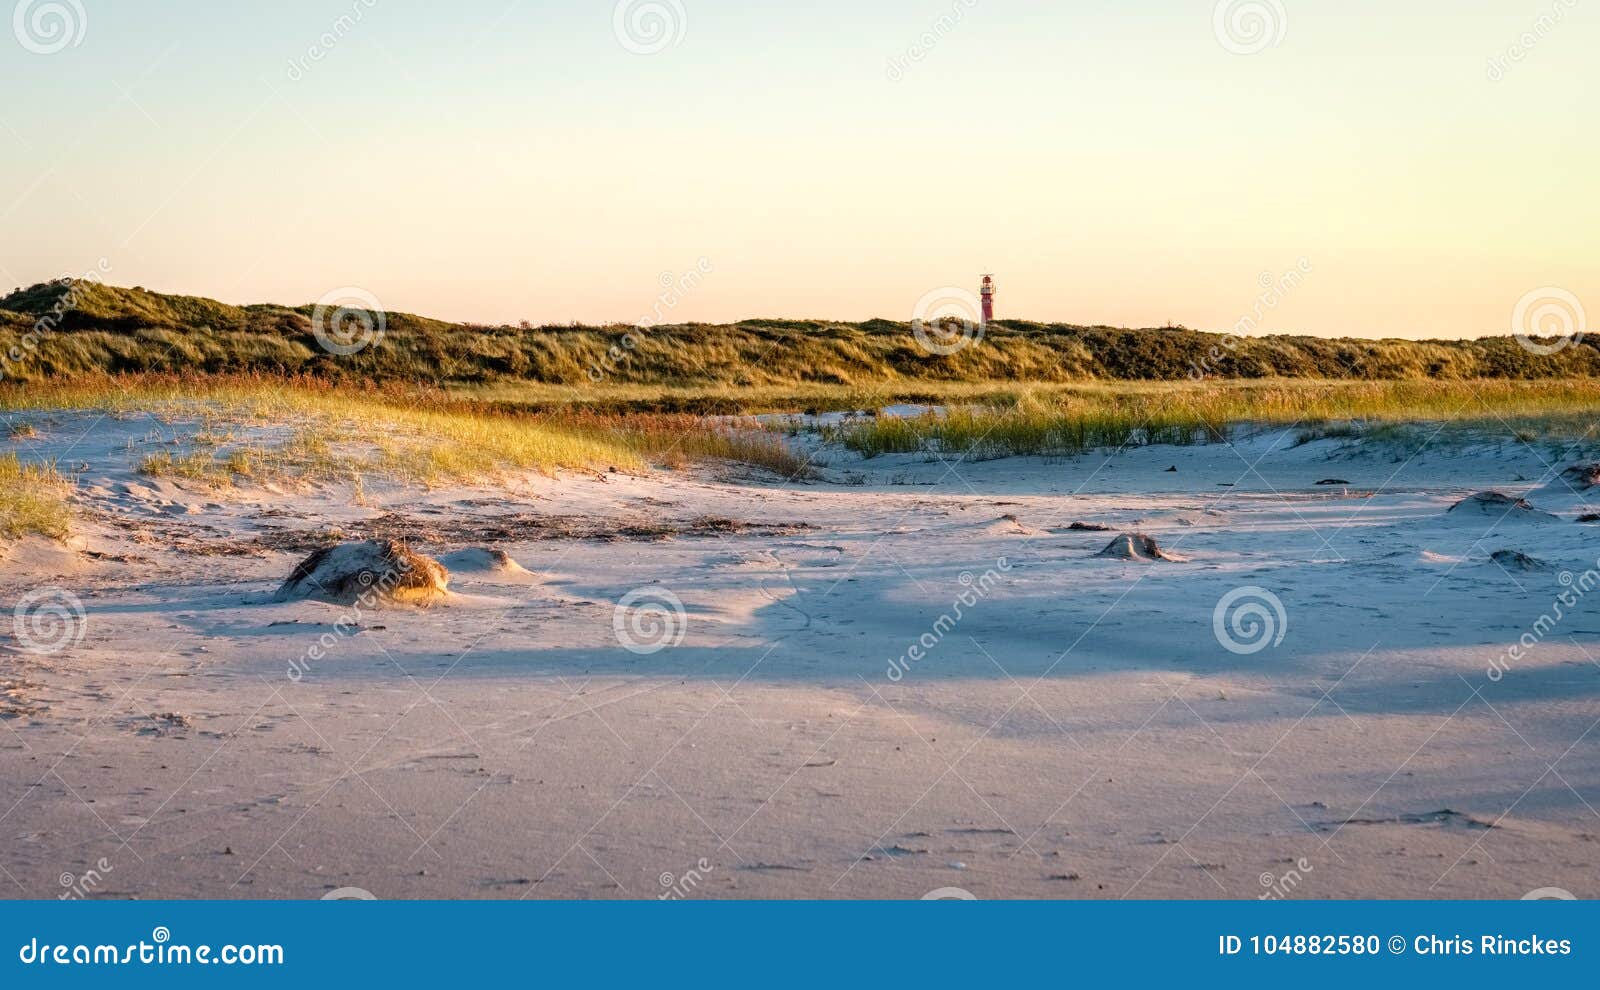 the sun is setting on the beach of schiermonnikoog friesland, netherlands